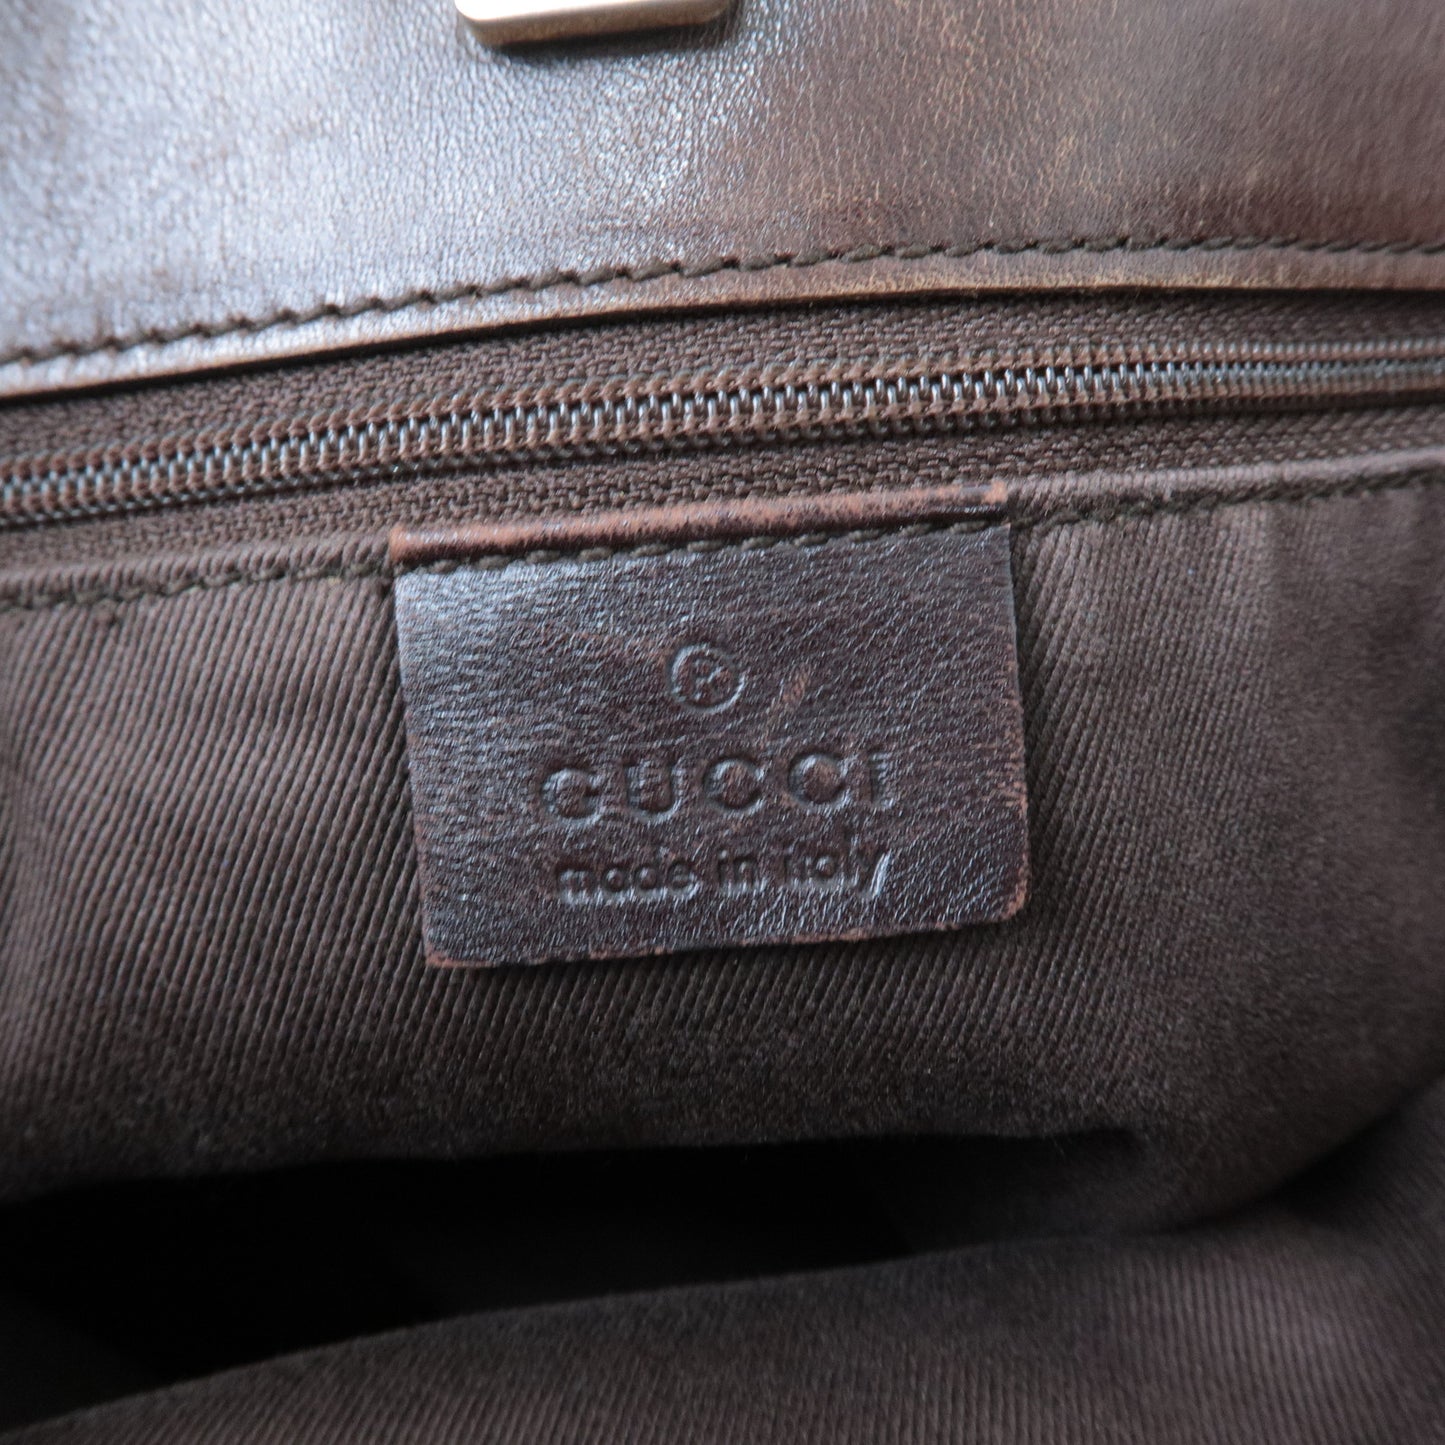 GUCCI GG Canvas Leather Shoulder Bag Beige Brown 90656